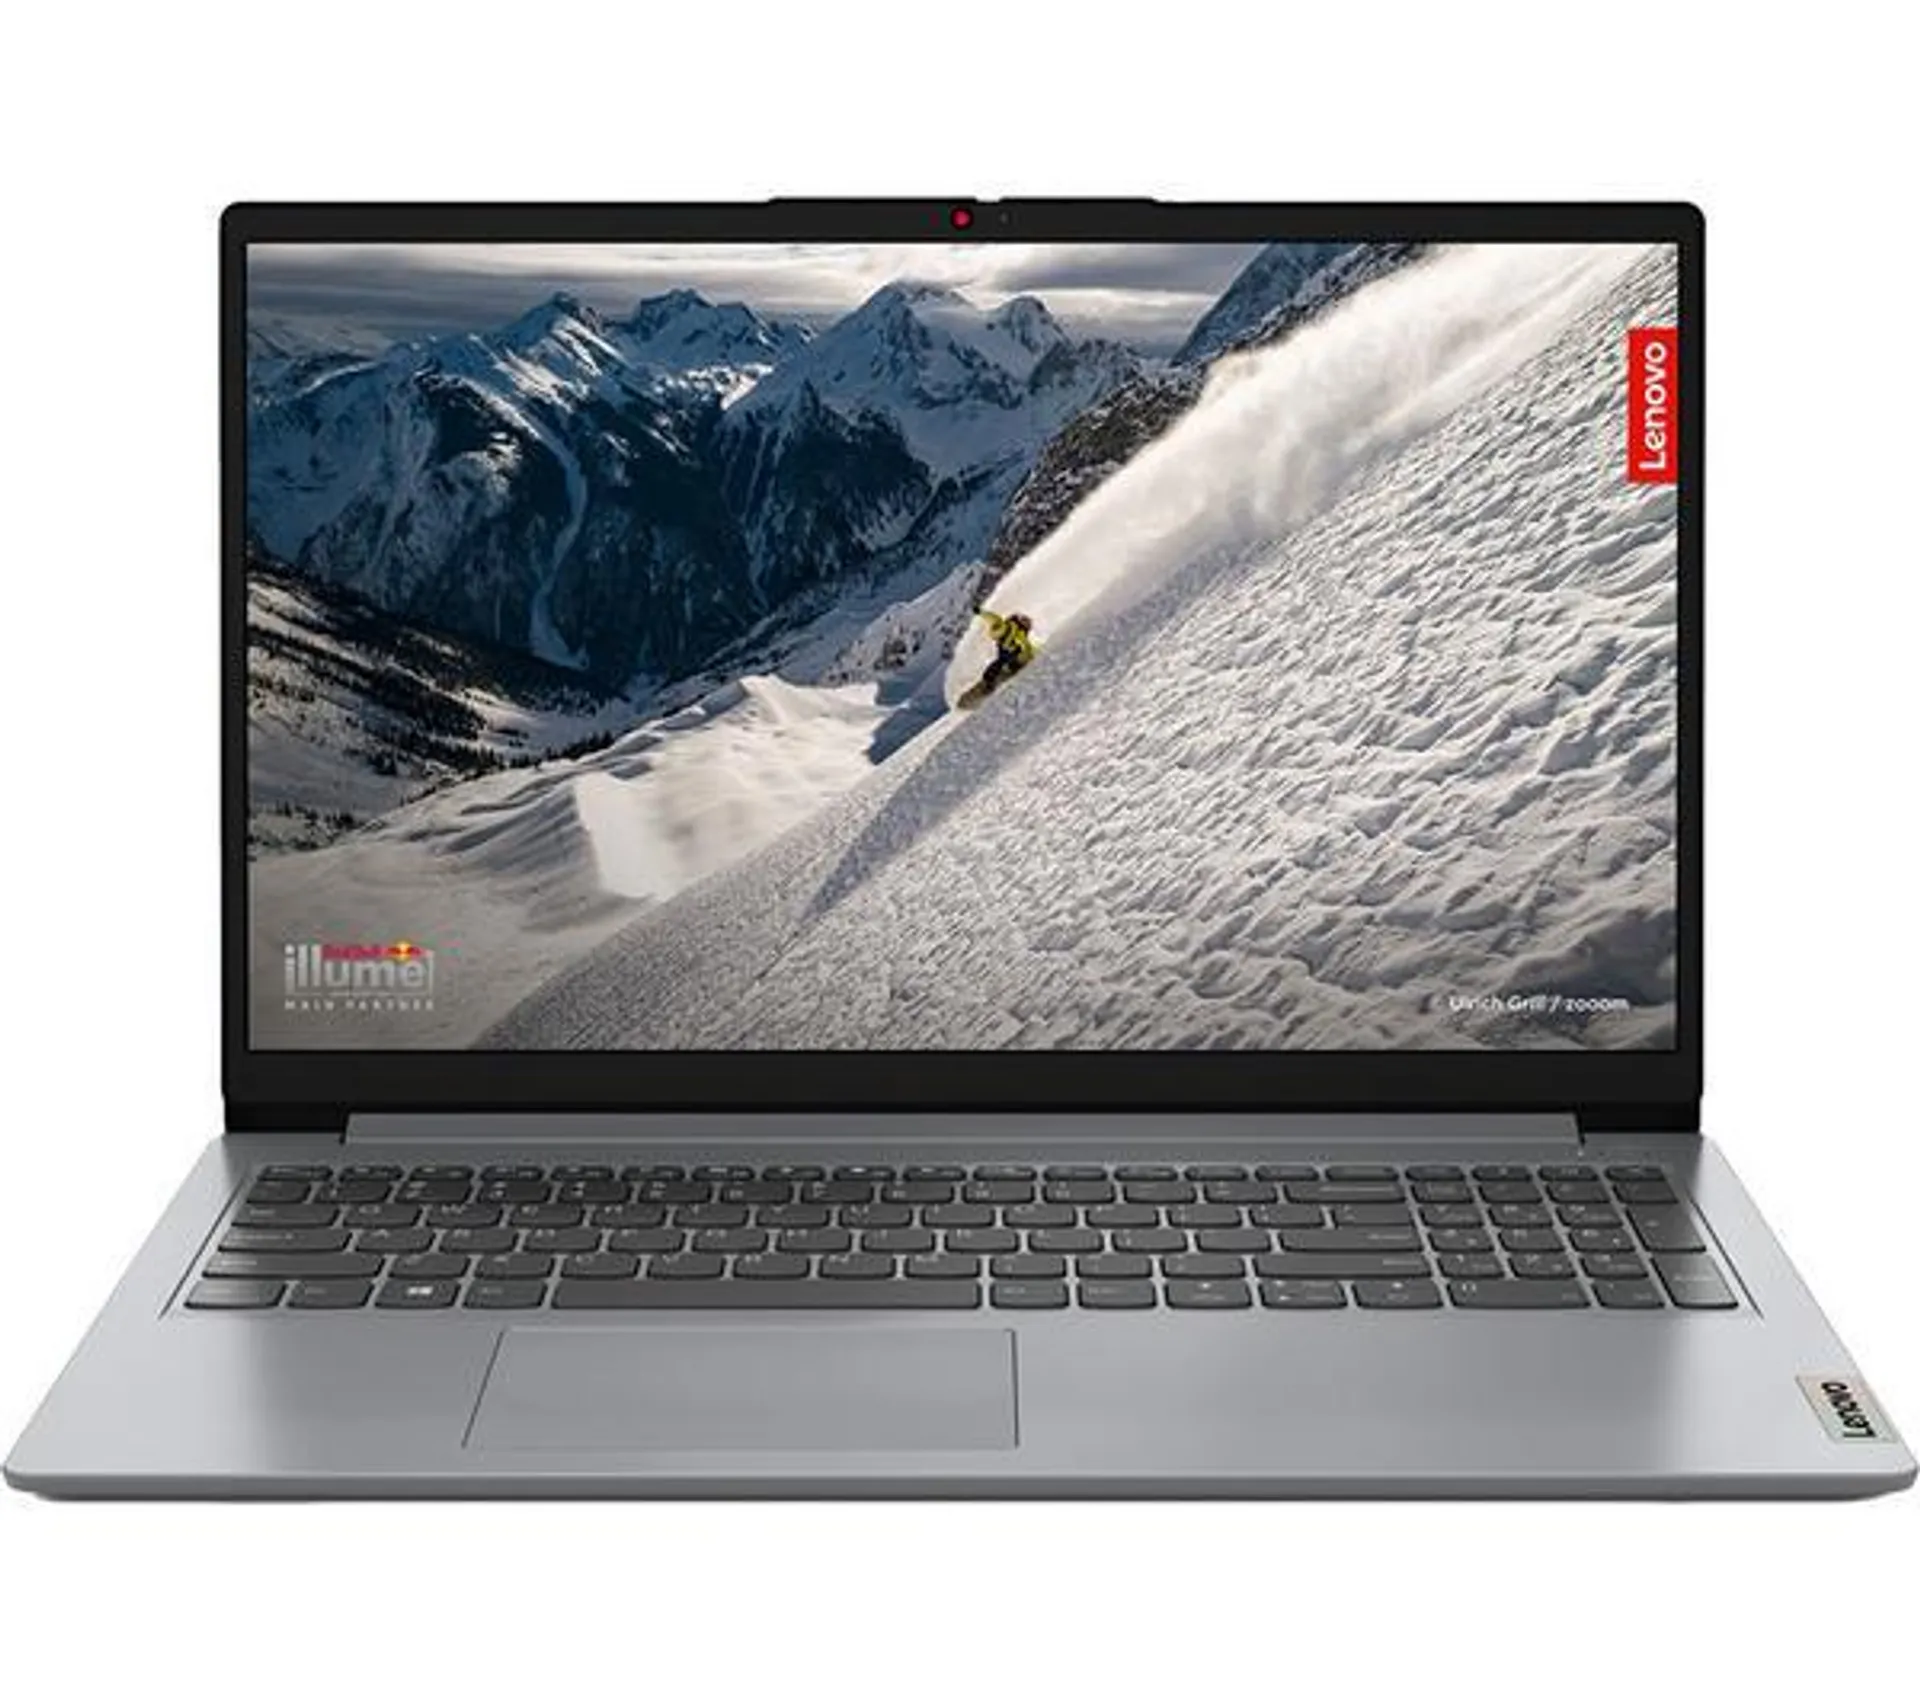 LENOVO IdeaPad 1 15.6" Laptop - AMD Ryzen 3, 128 GB SSD, Grey